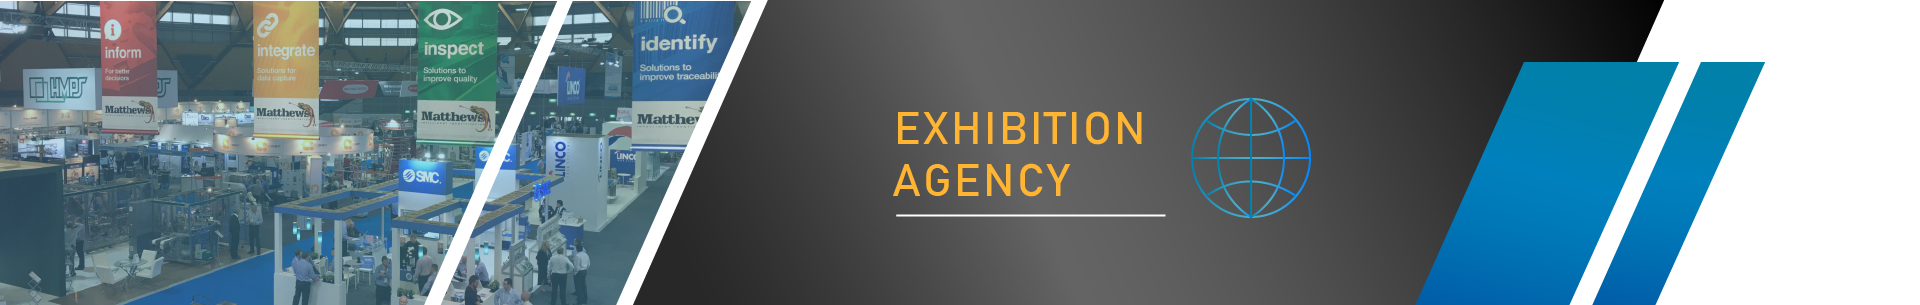 Global Exhibition Agent, Overseas Exhibition Agent, Packaging Exhibition Agent, Food Exhibition Agent, Pharmaceutical Exhibition Agent